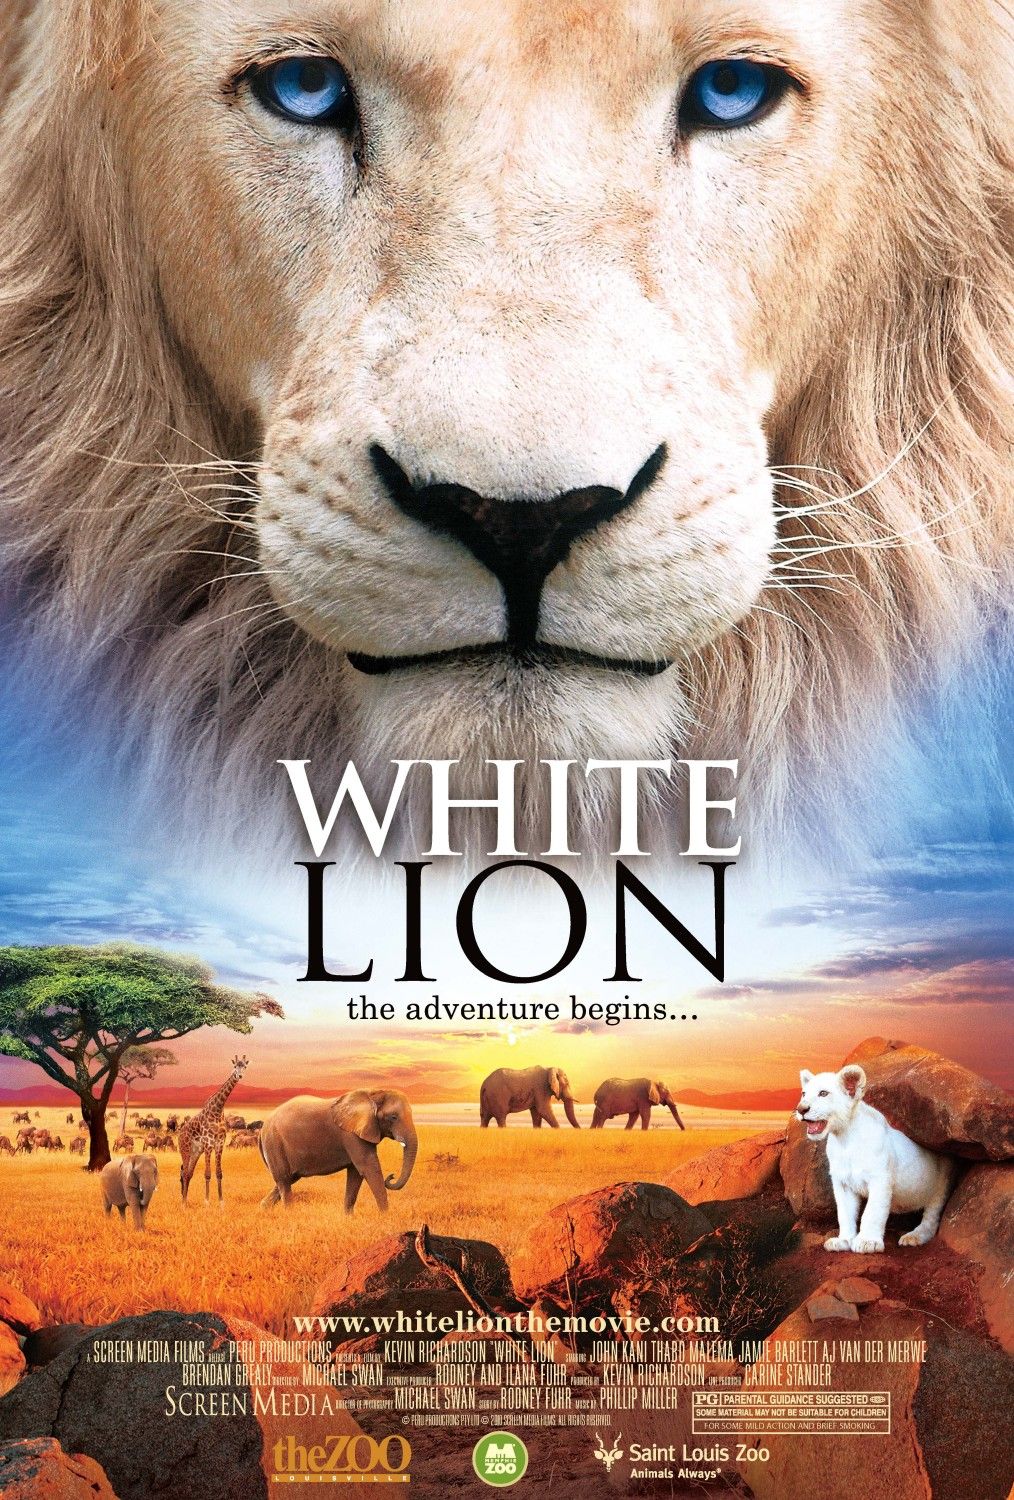 White Lion movie